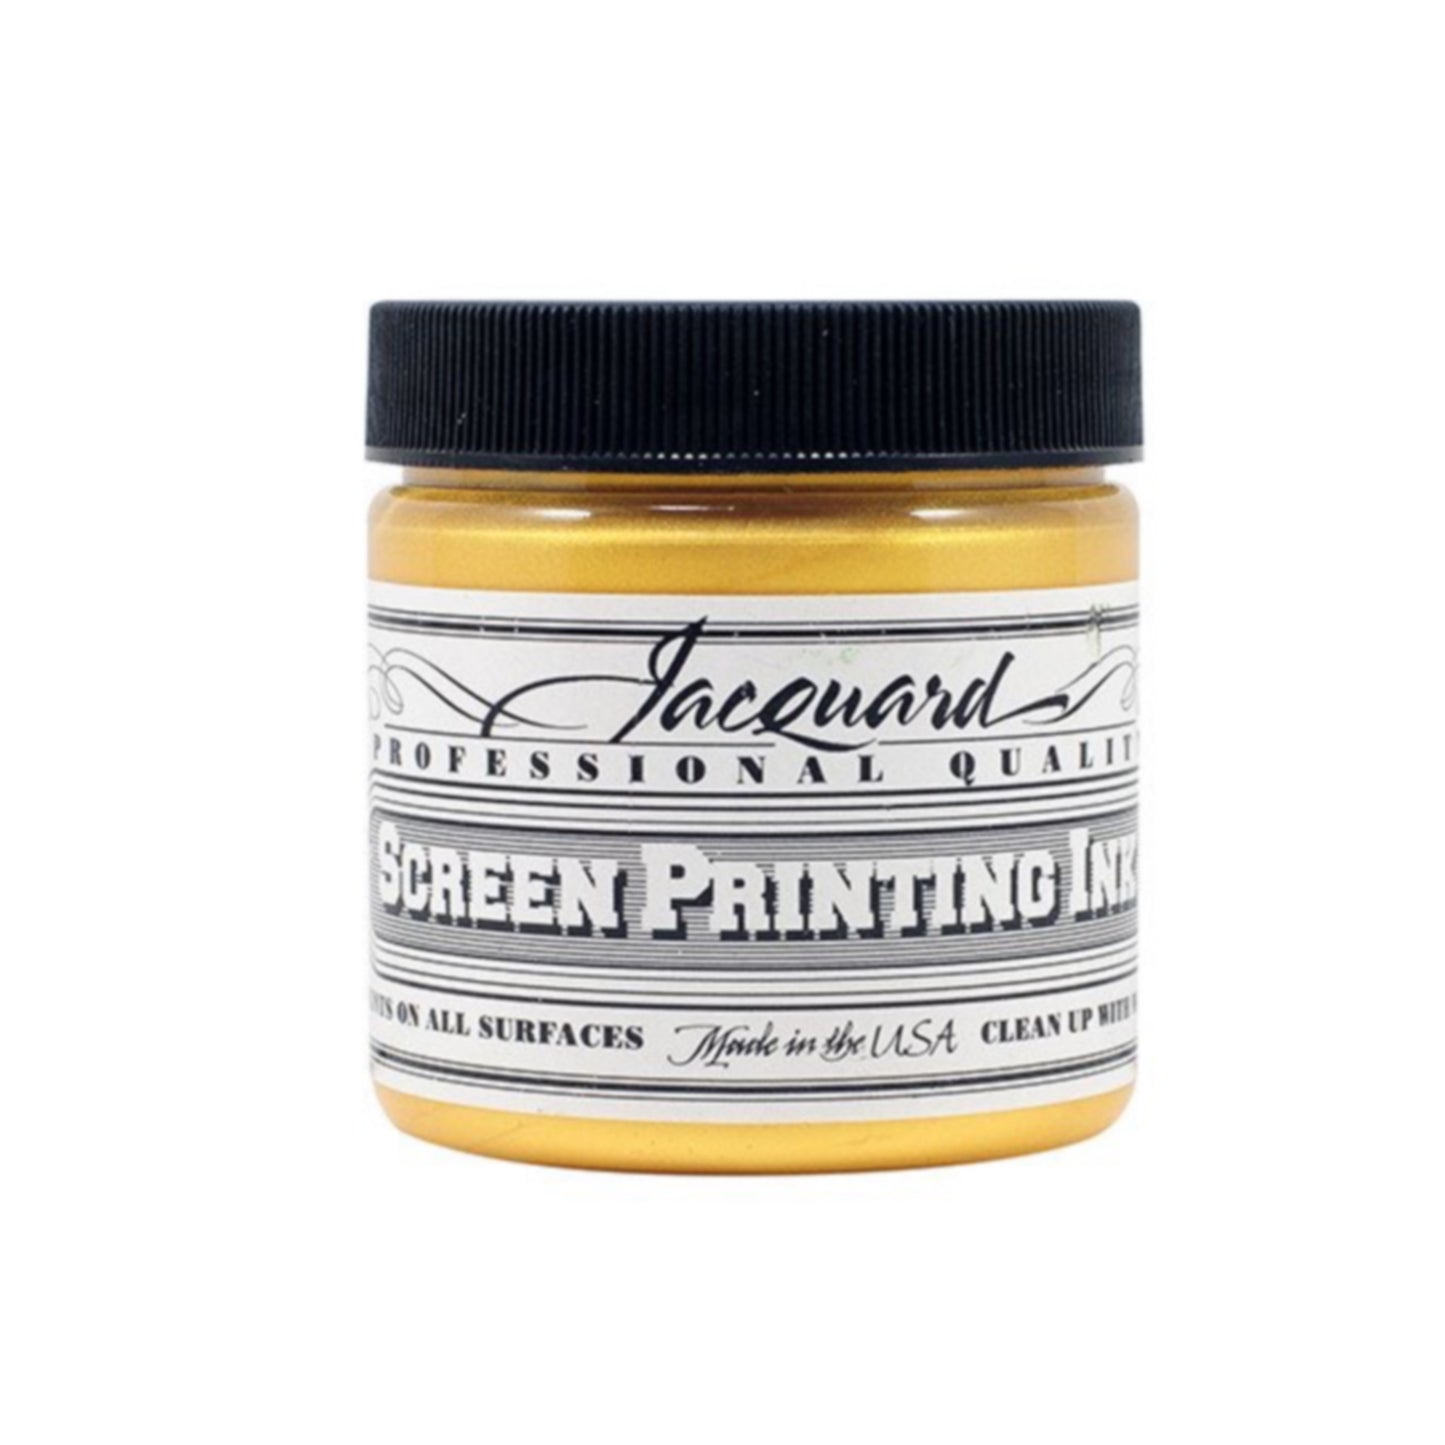 Jacquard Screen Printing Ink - Large Jar (16 fl. oz.) / 121 Gold by Jacquard - K. A. Artist Shop